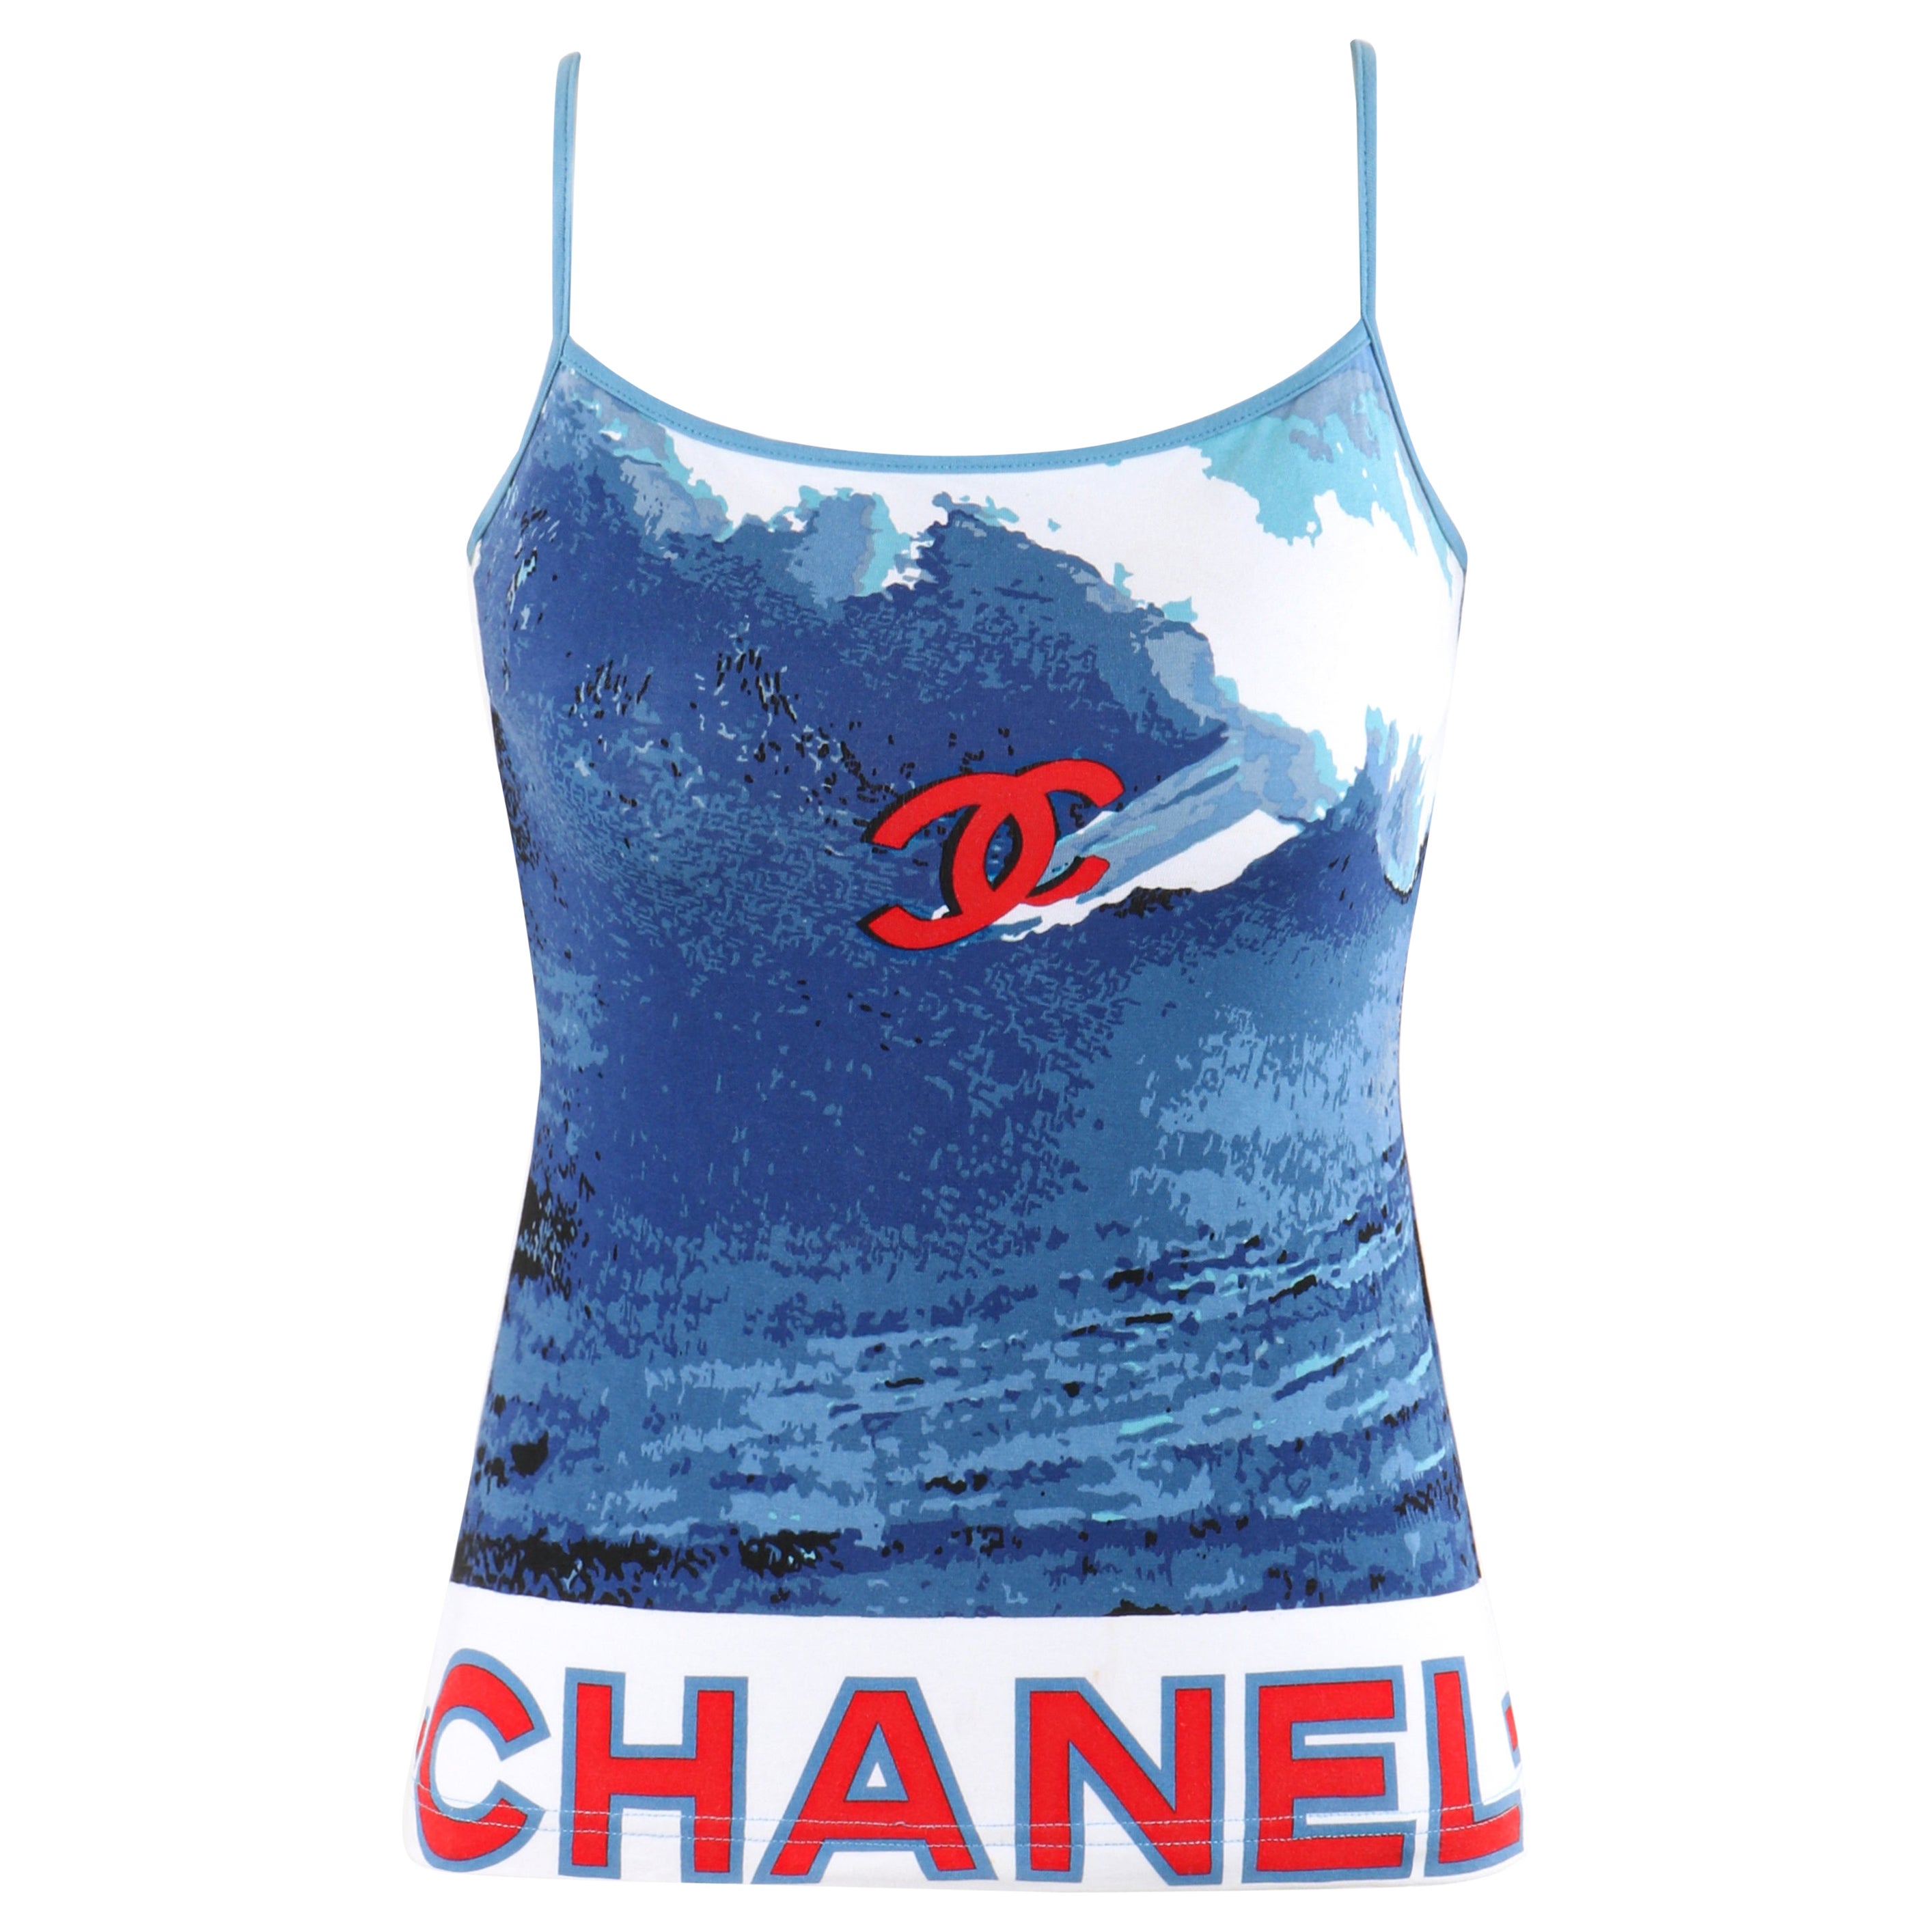 Chanel Surf 2002 - 3 For Sale on 1stDibs  chanel 2002 surf dress, chanel  surf dress dupe, chanel surf collection